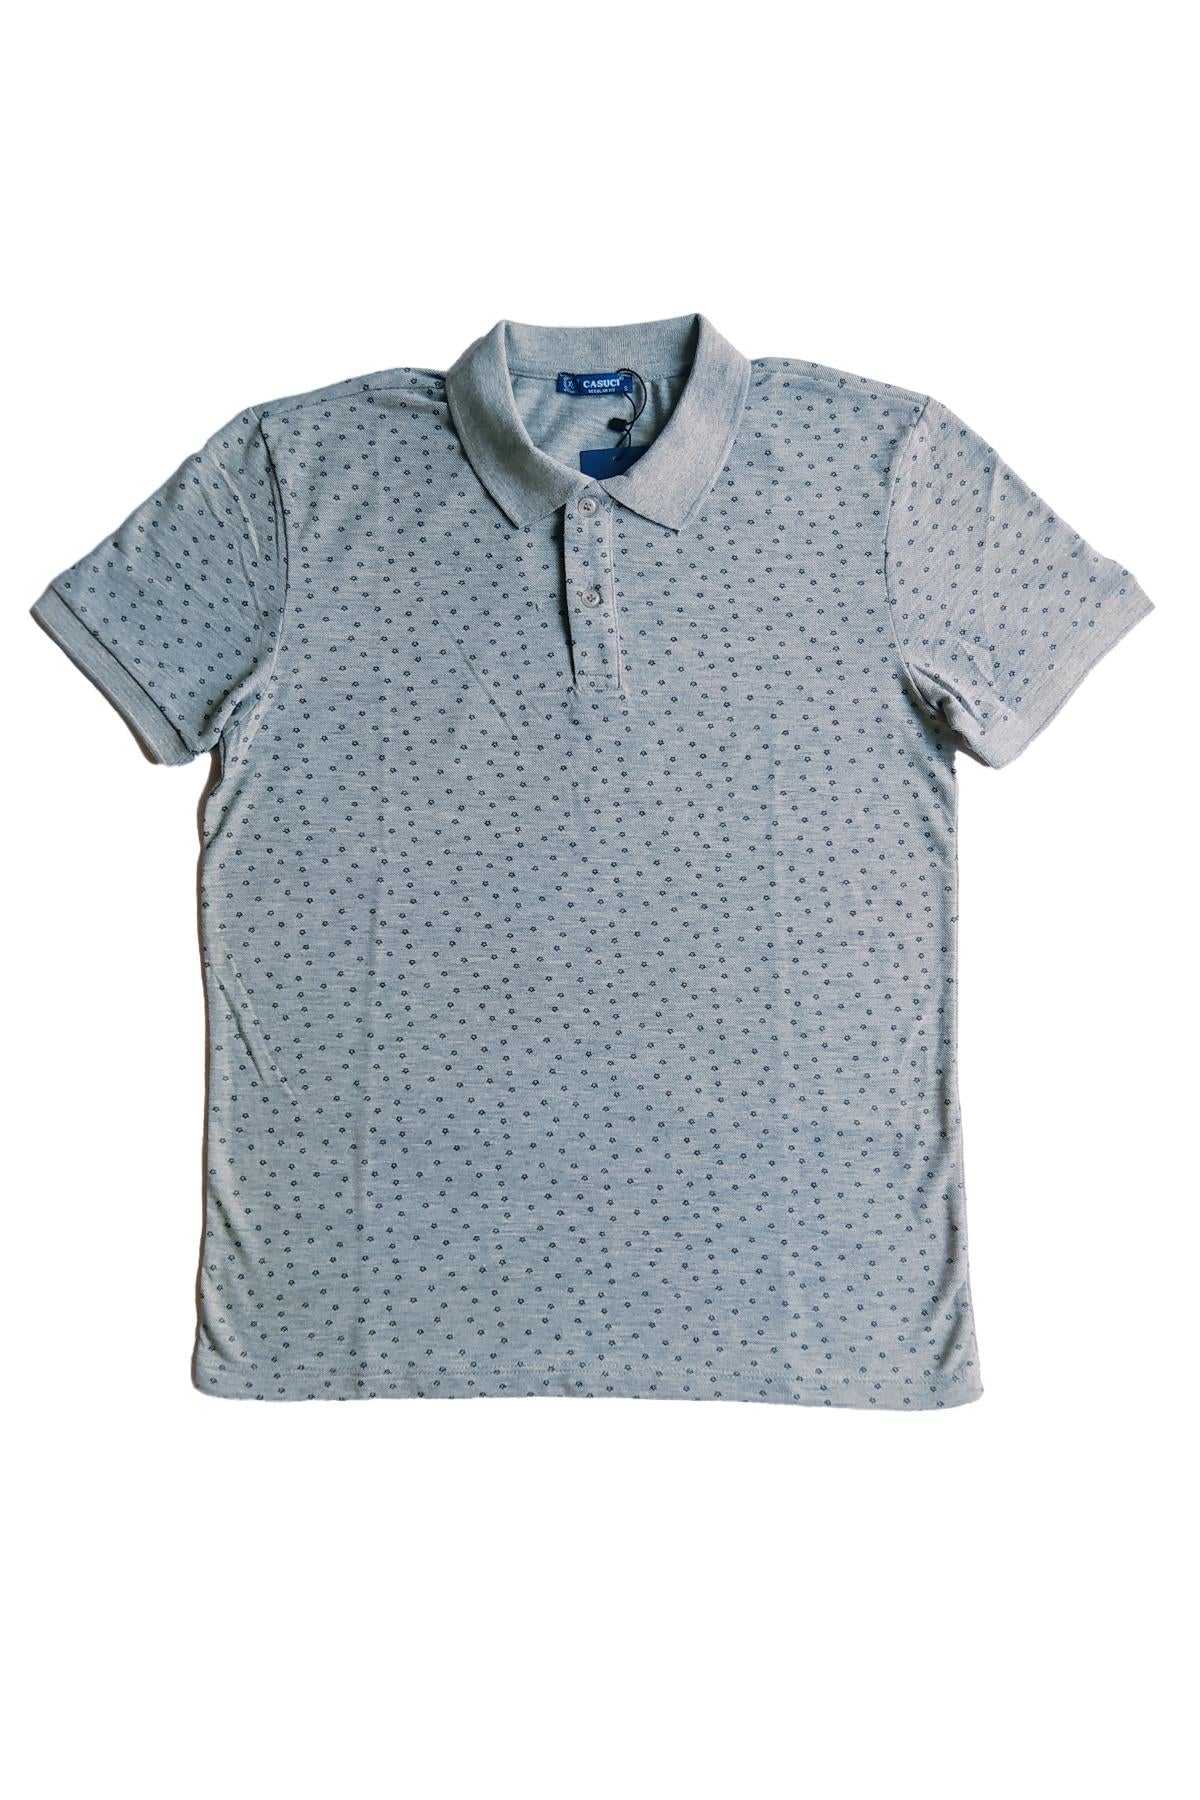 Black star patterned Cotton Men's Short Sleeve Polo Yaka T -shirt